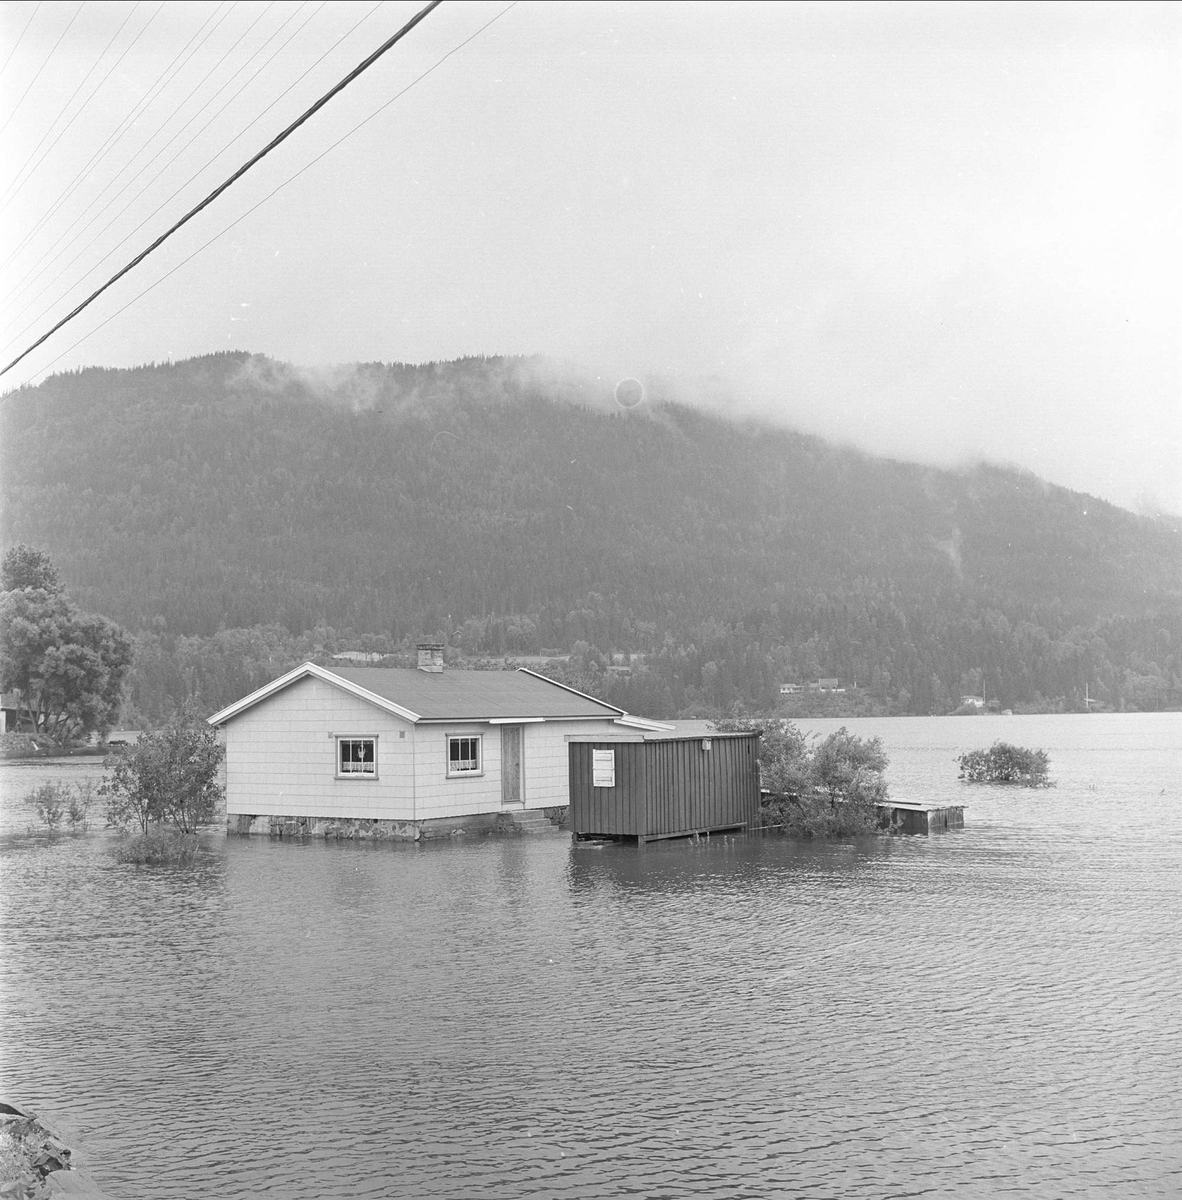 Sundøya, antatt Hole, Buskerud, august 1965. Hytter i flom.